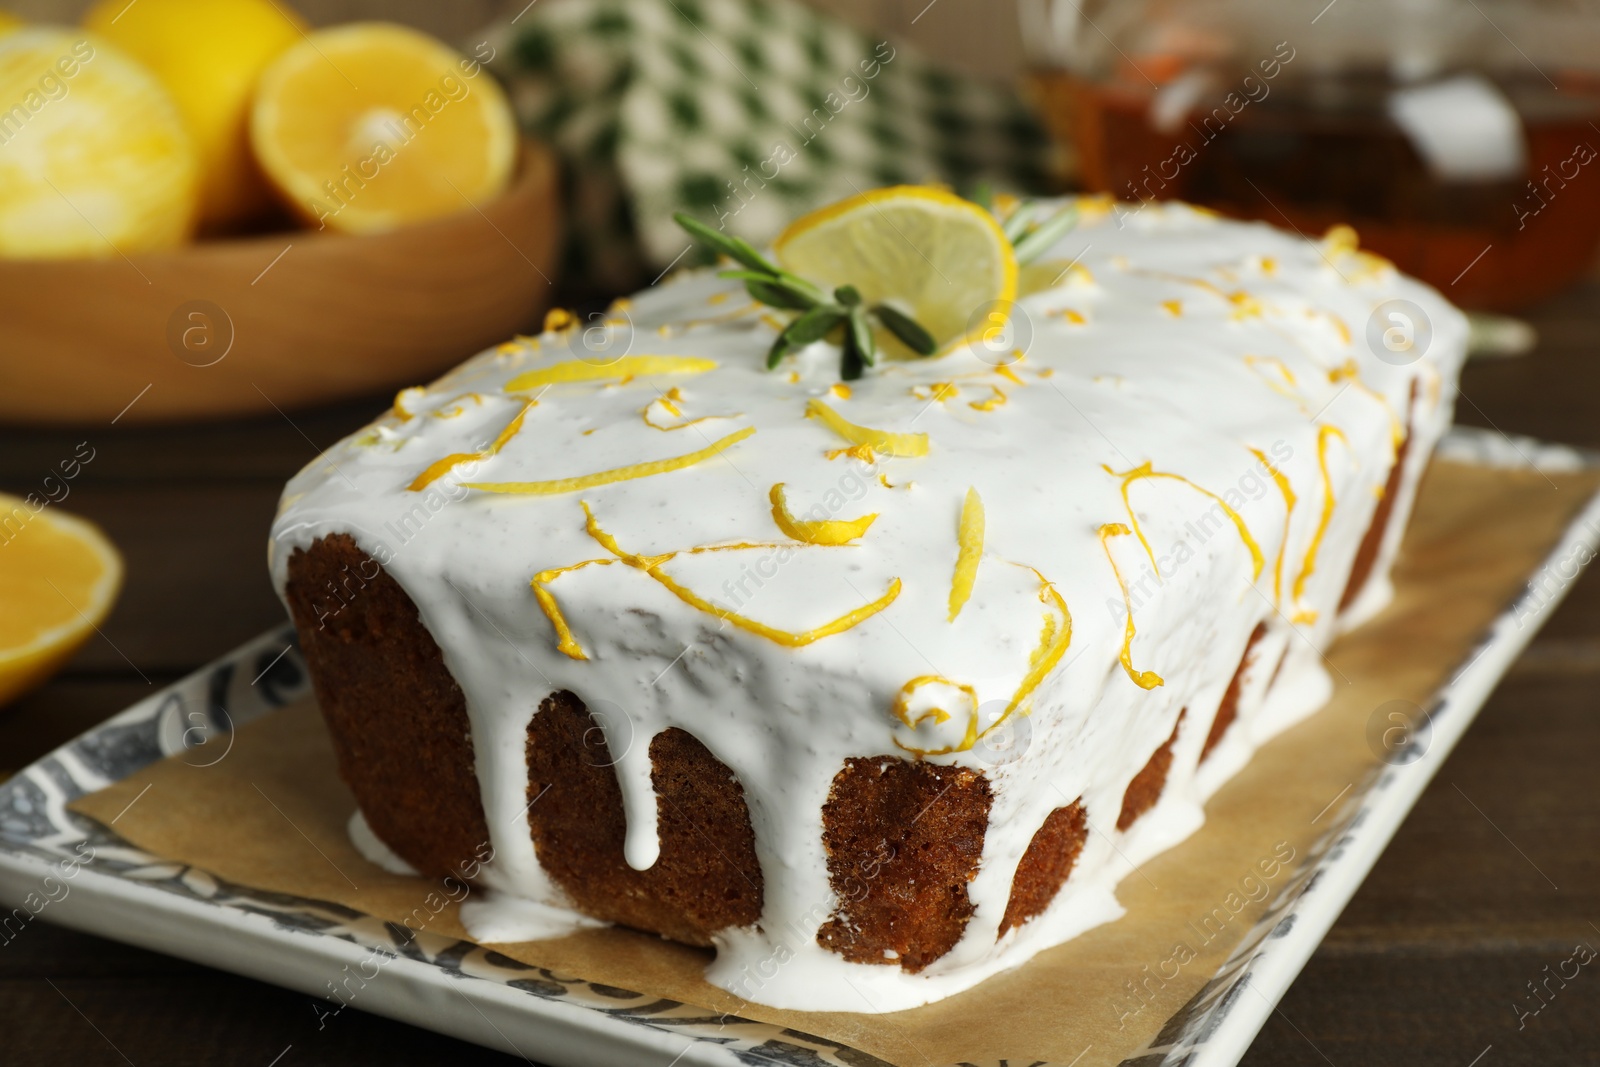 Photo of Tasty lemon cake with glaze on wooden table, closeup